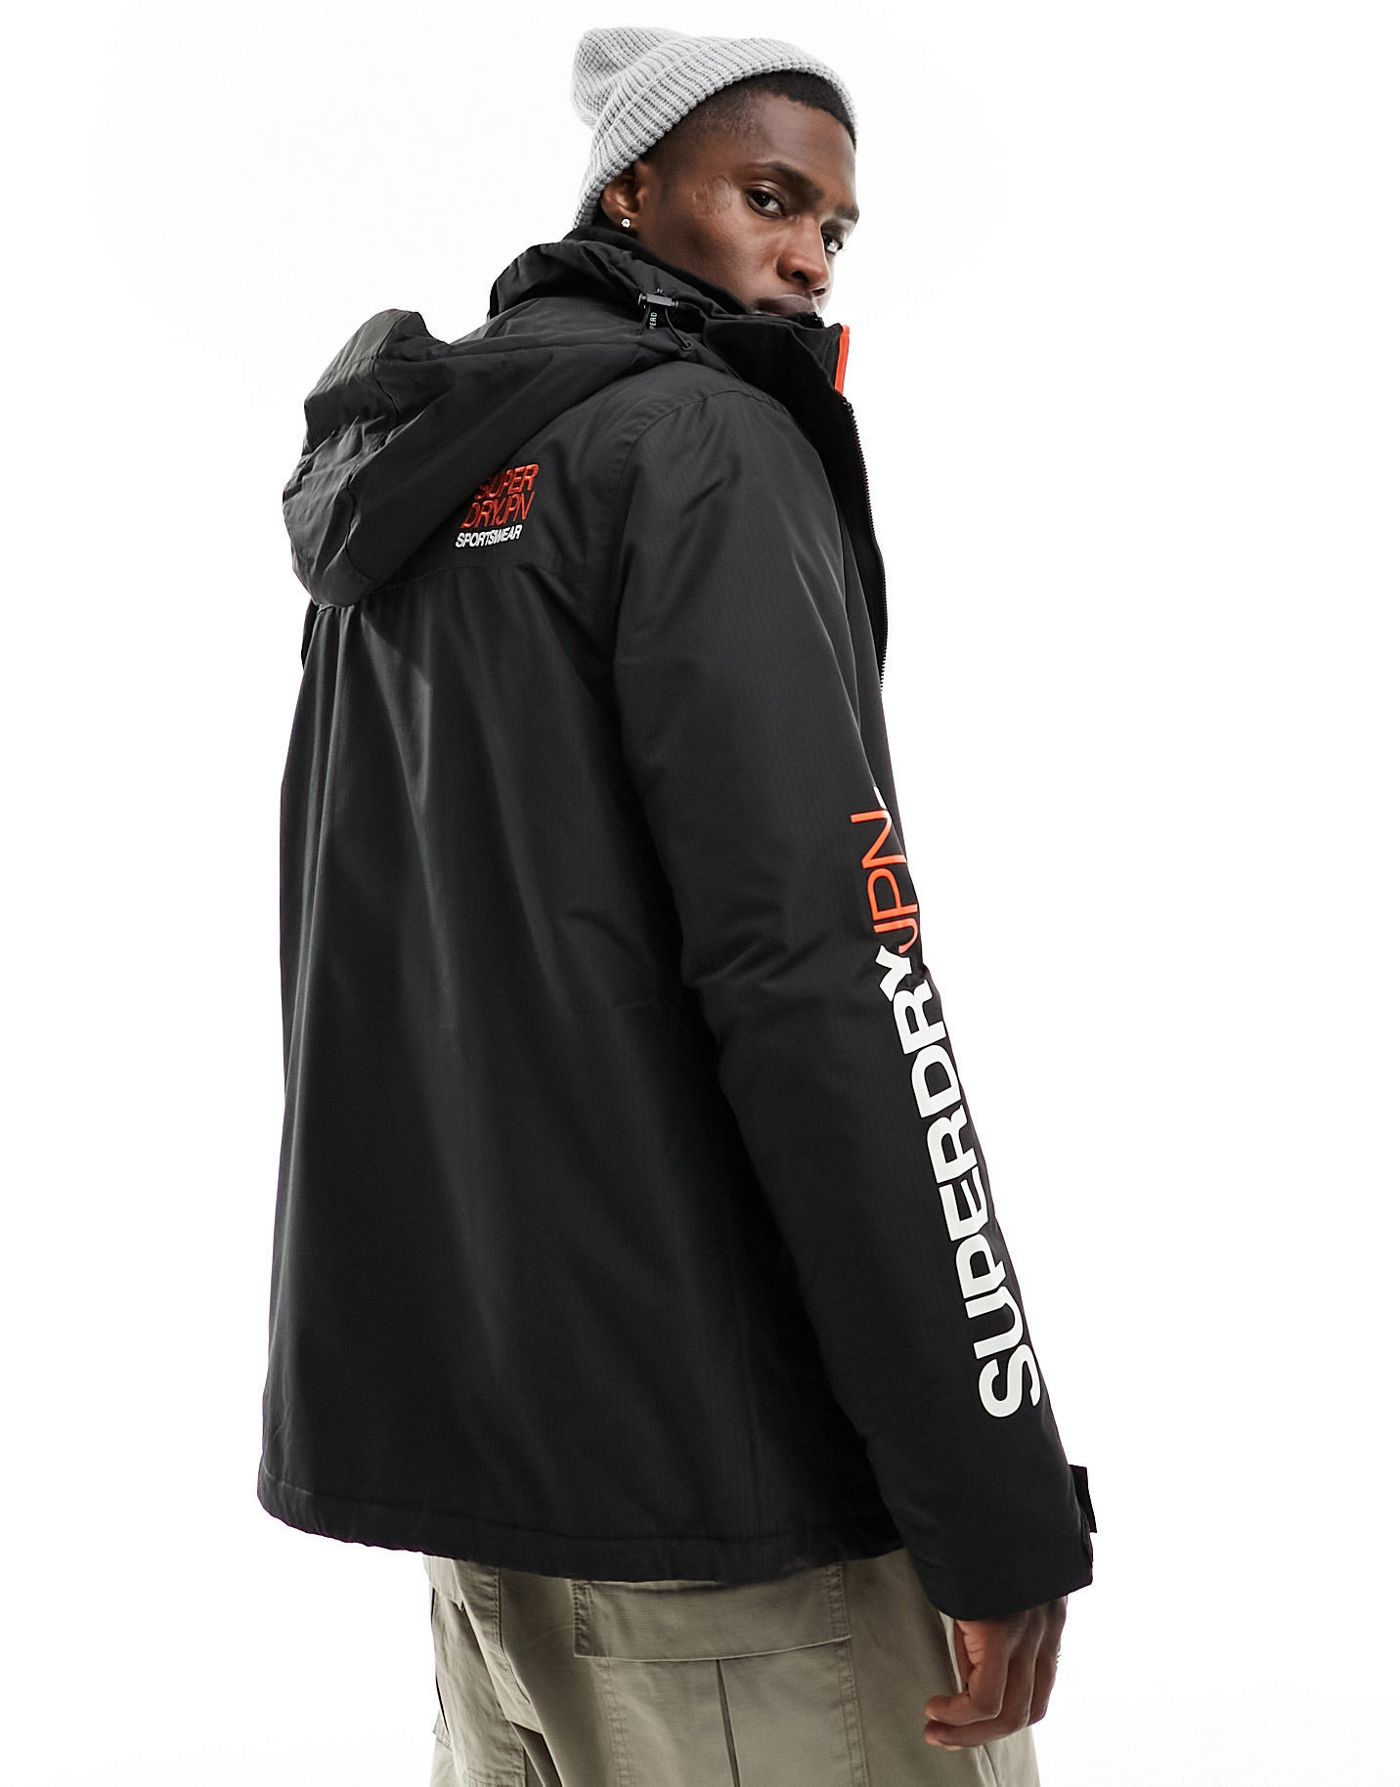 Superdry Hooded yachter windbreaker jacket in black/bold orange